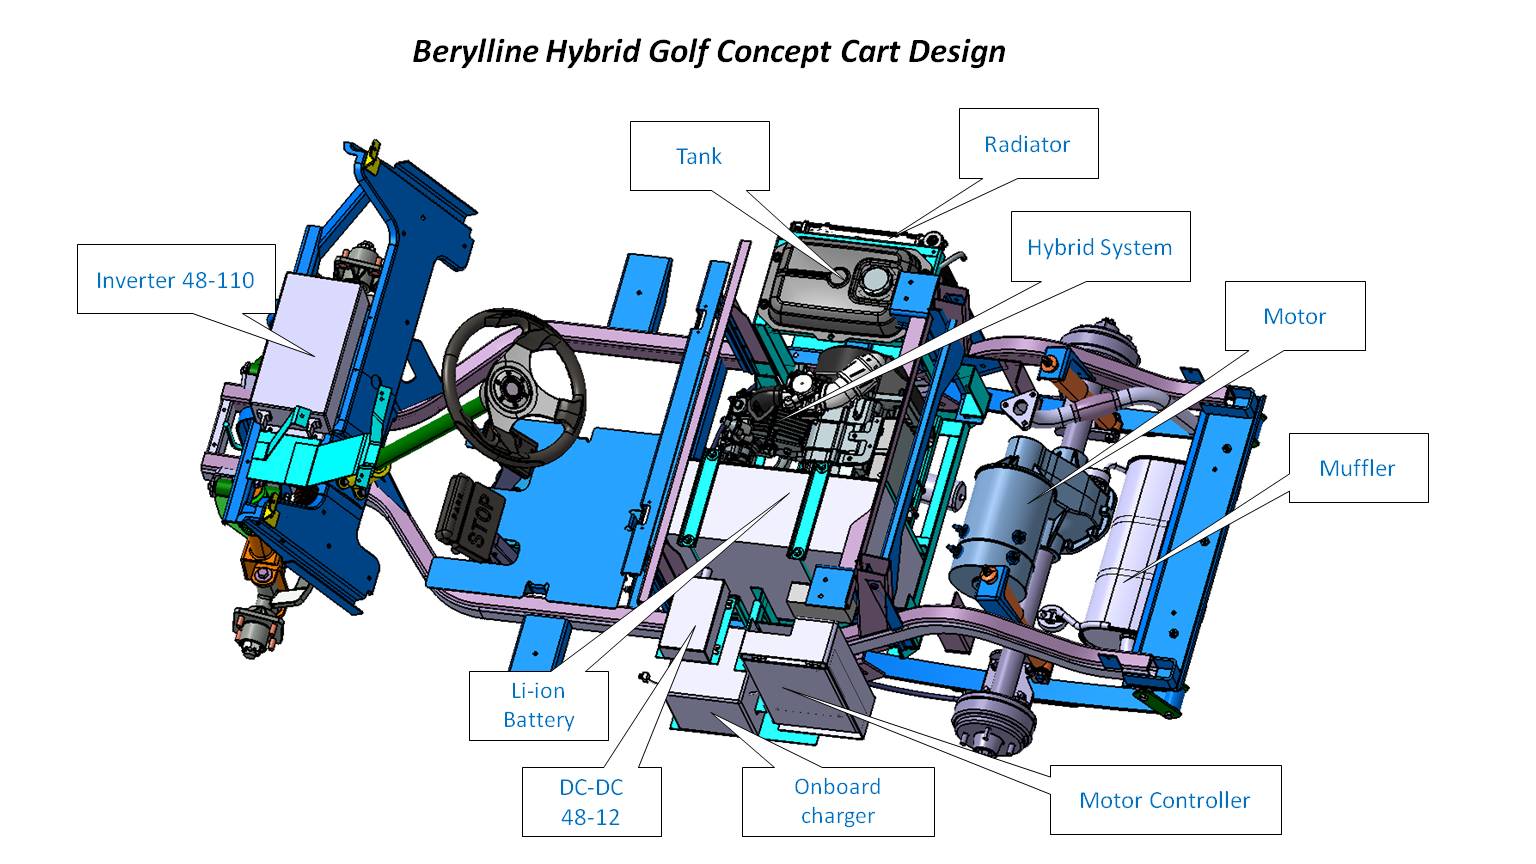 Berylline Hybrid Golf Concept Cart Design